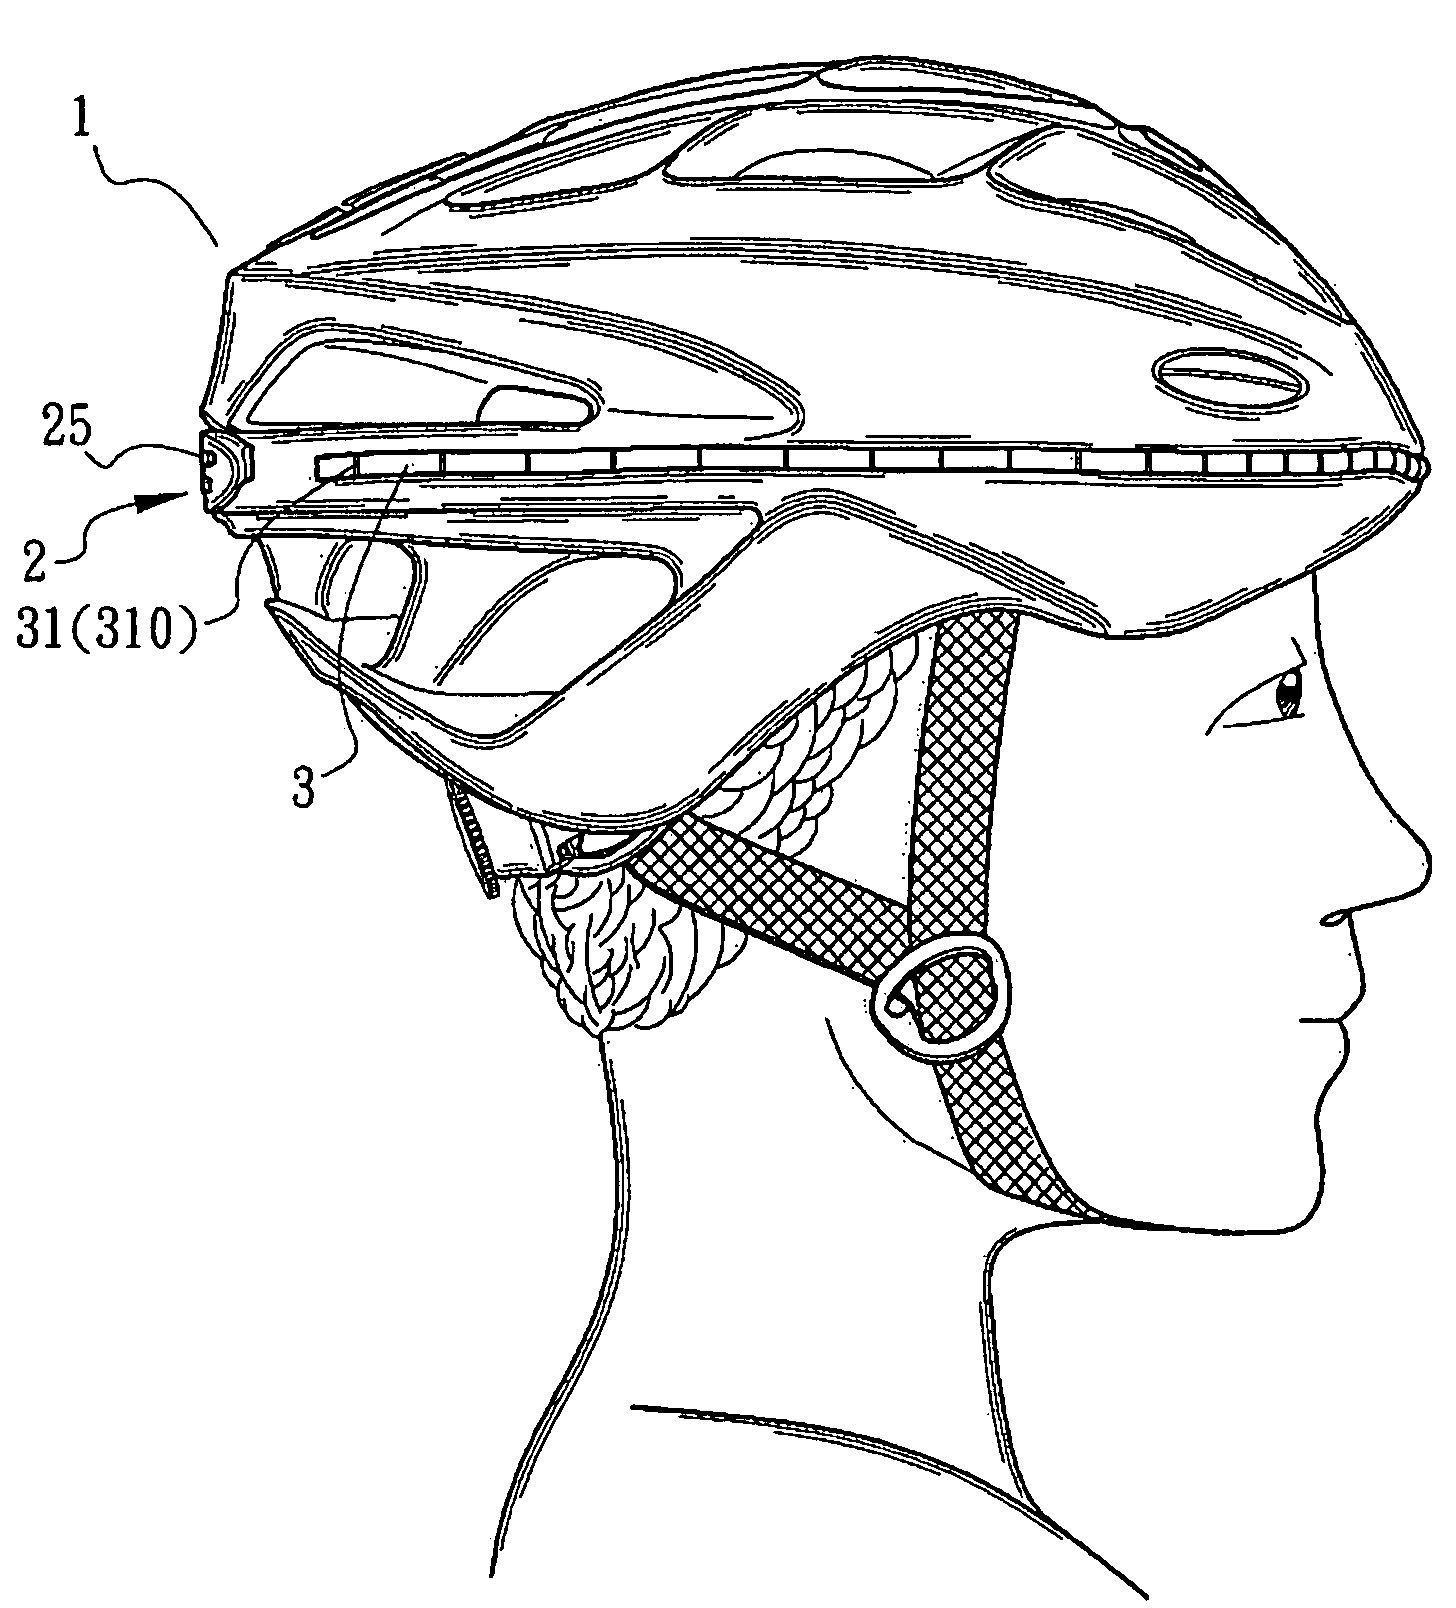 Light-emitting warning device of a safety helmet